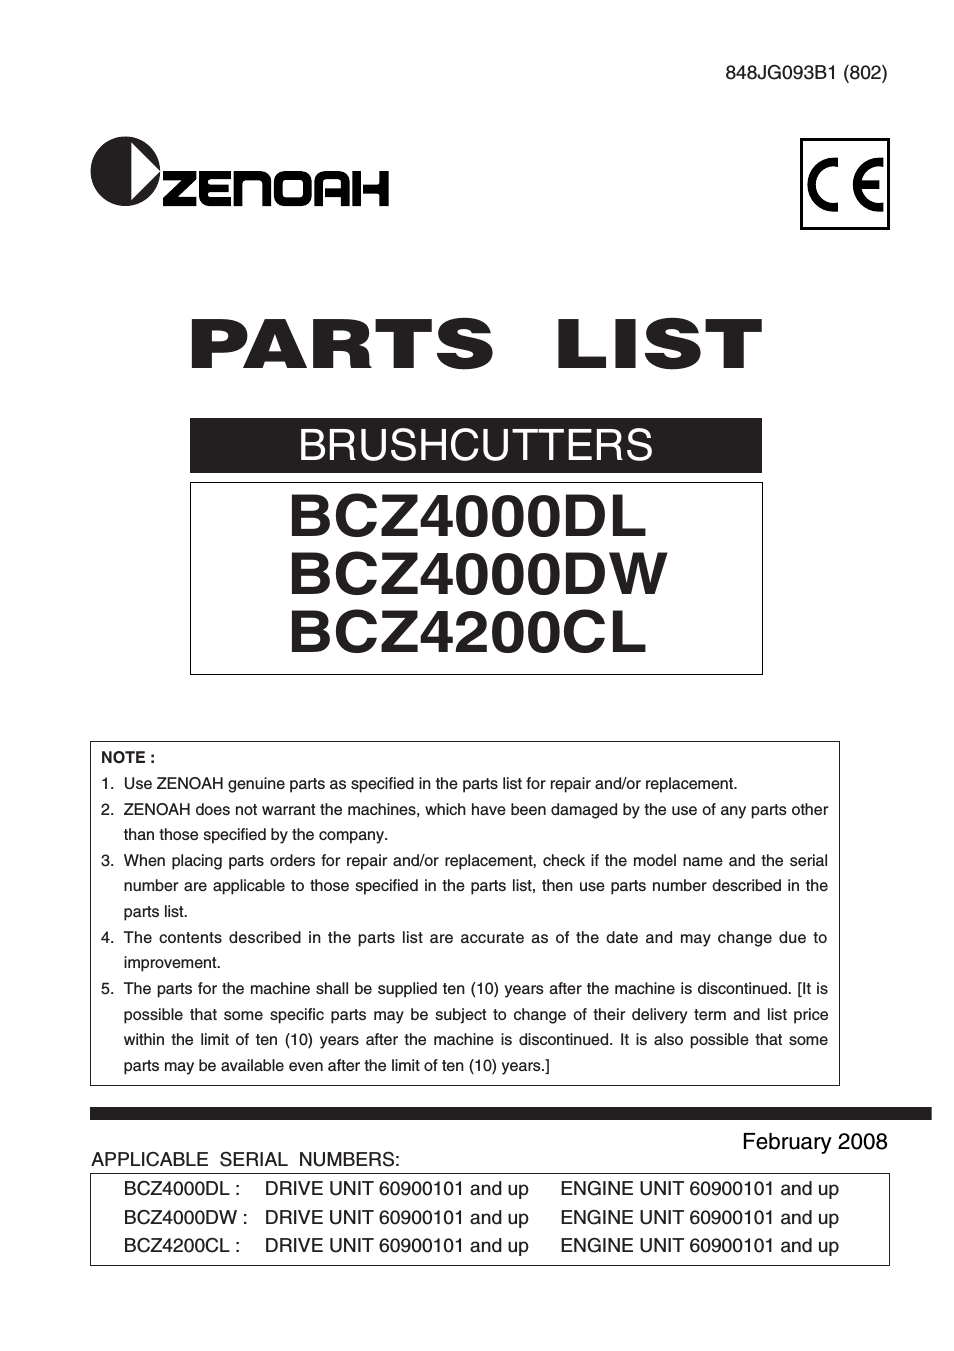 BRUSHCUTTERS BCZ4000DW